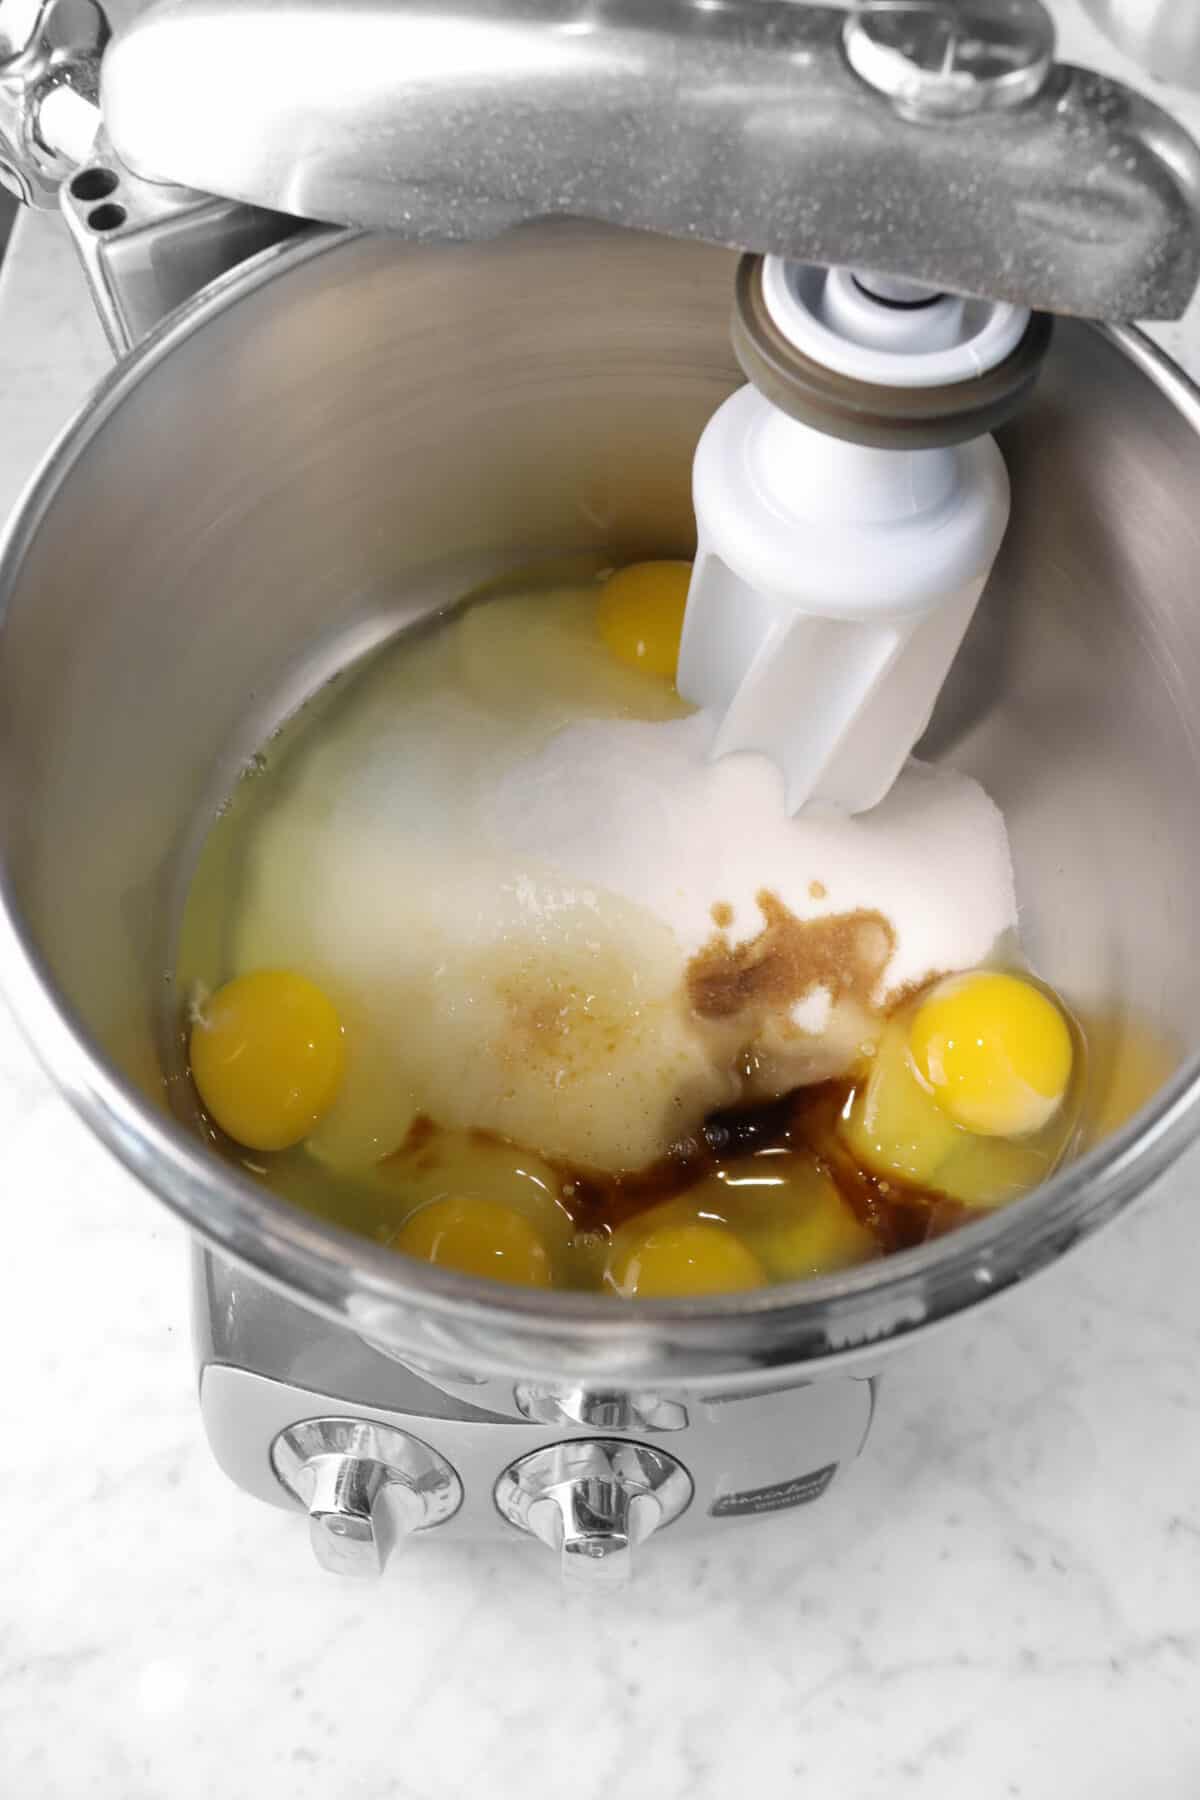 eggs, vanilla, and sugar in a mixer